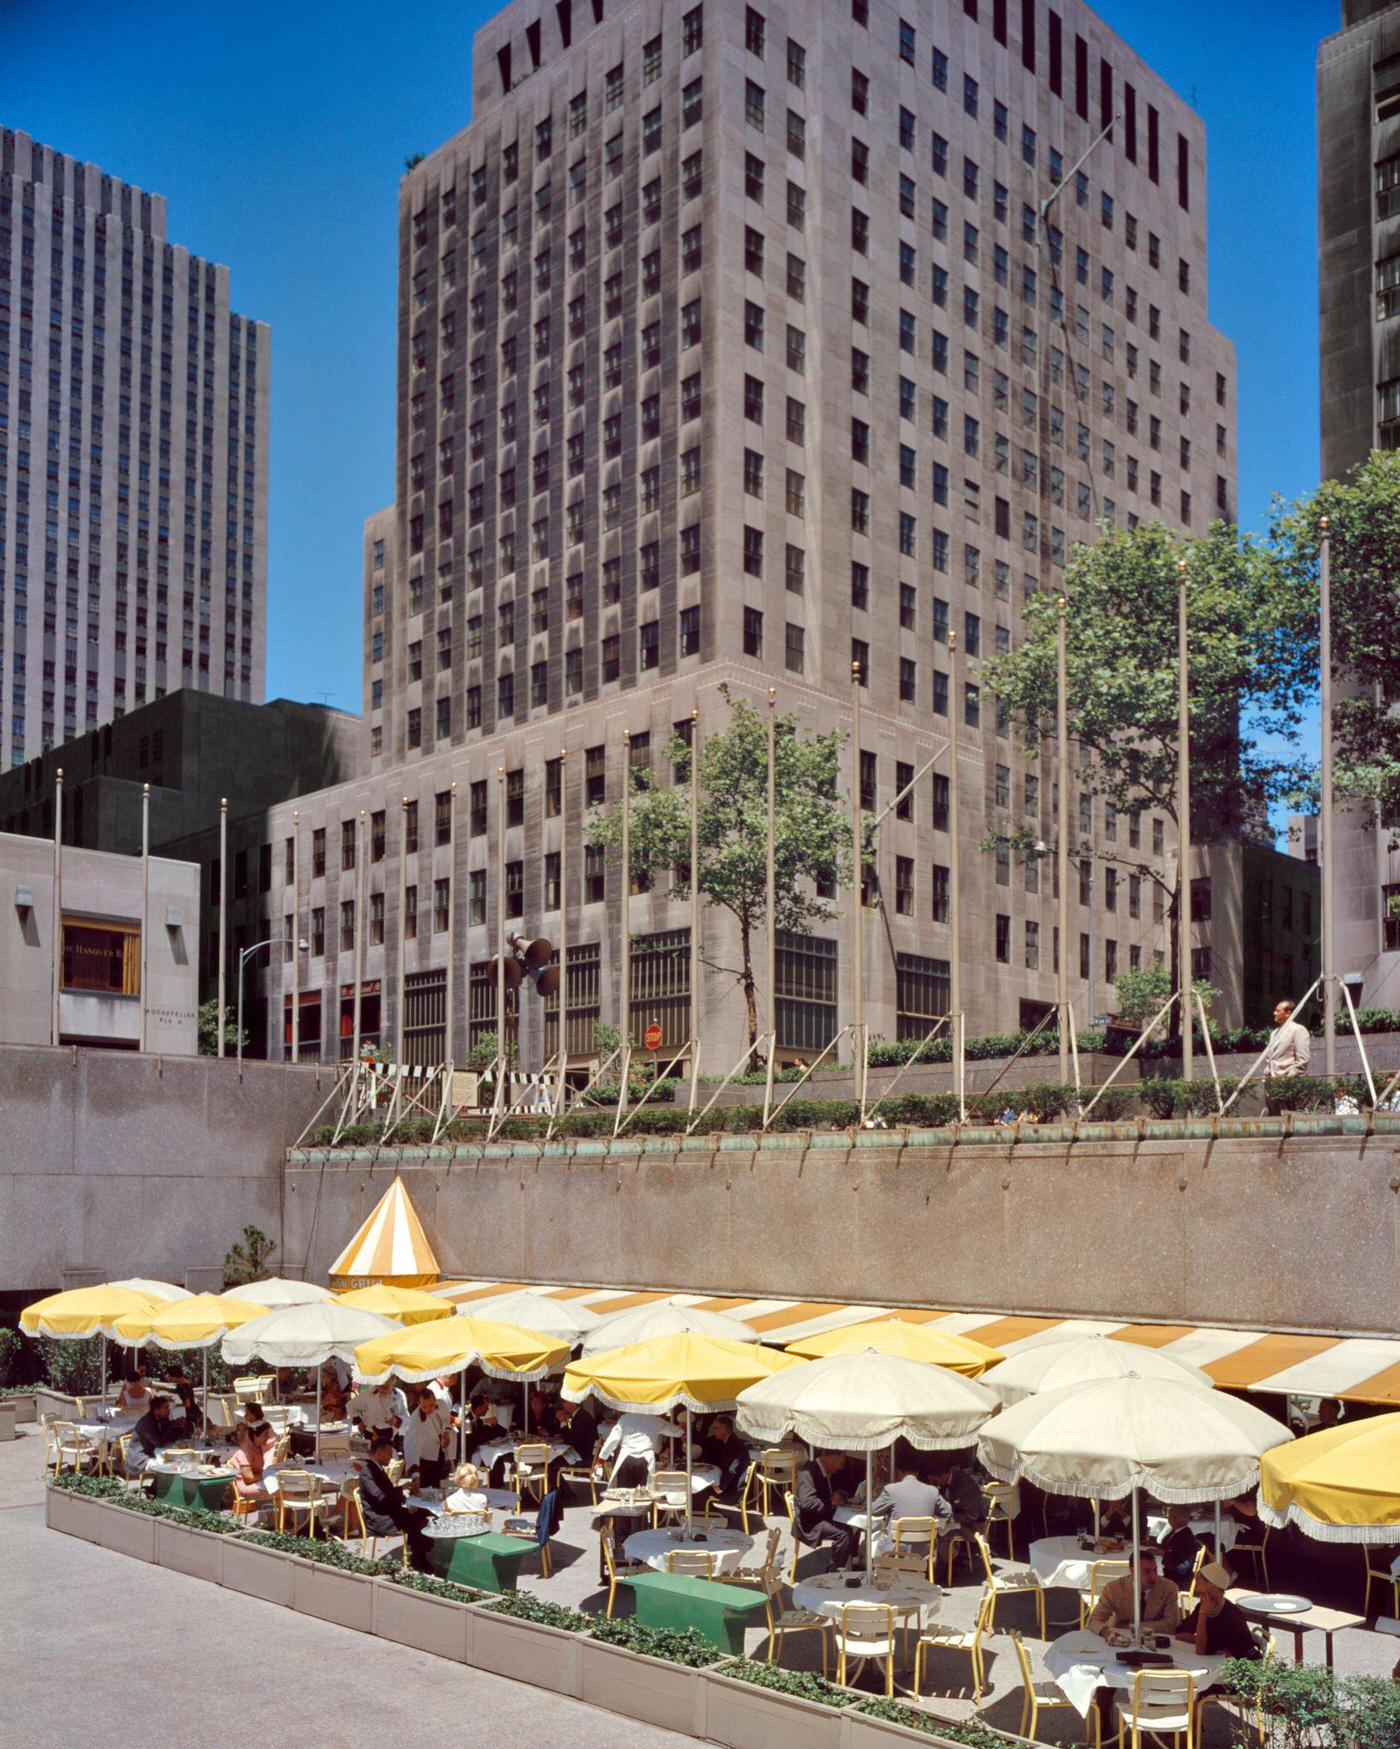 Outdoor Restaurant In Plaza Of Rockefeller Center, Manhattan, 1950S.